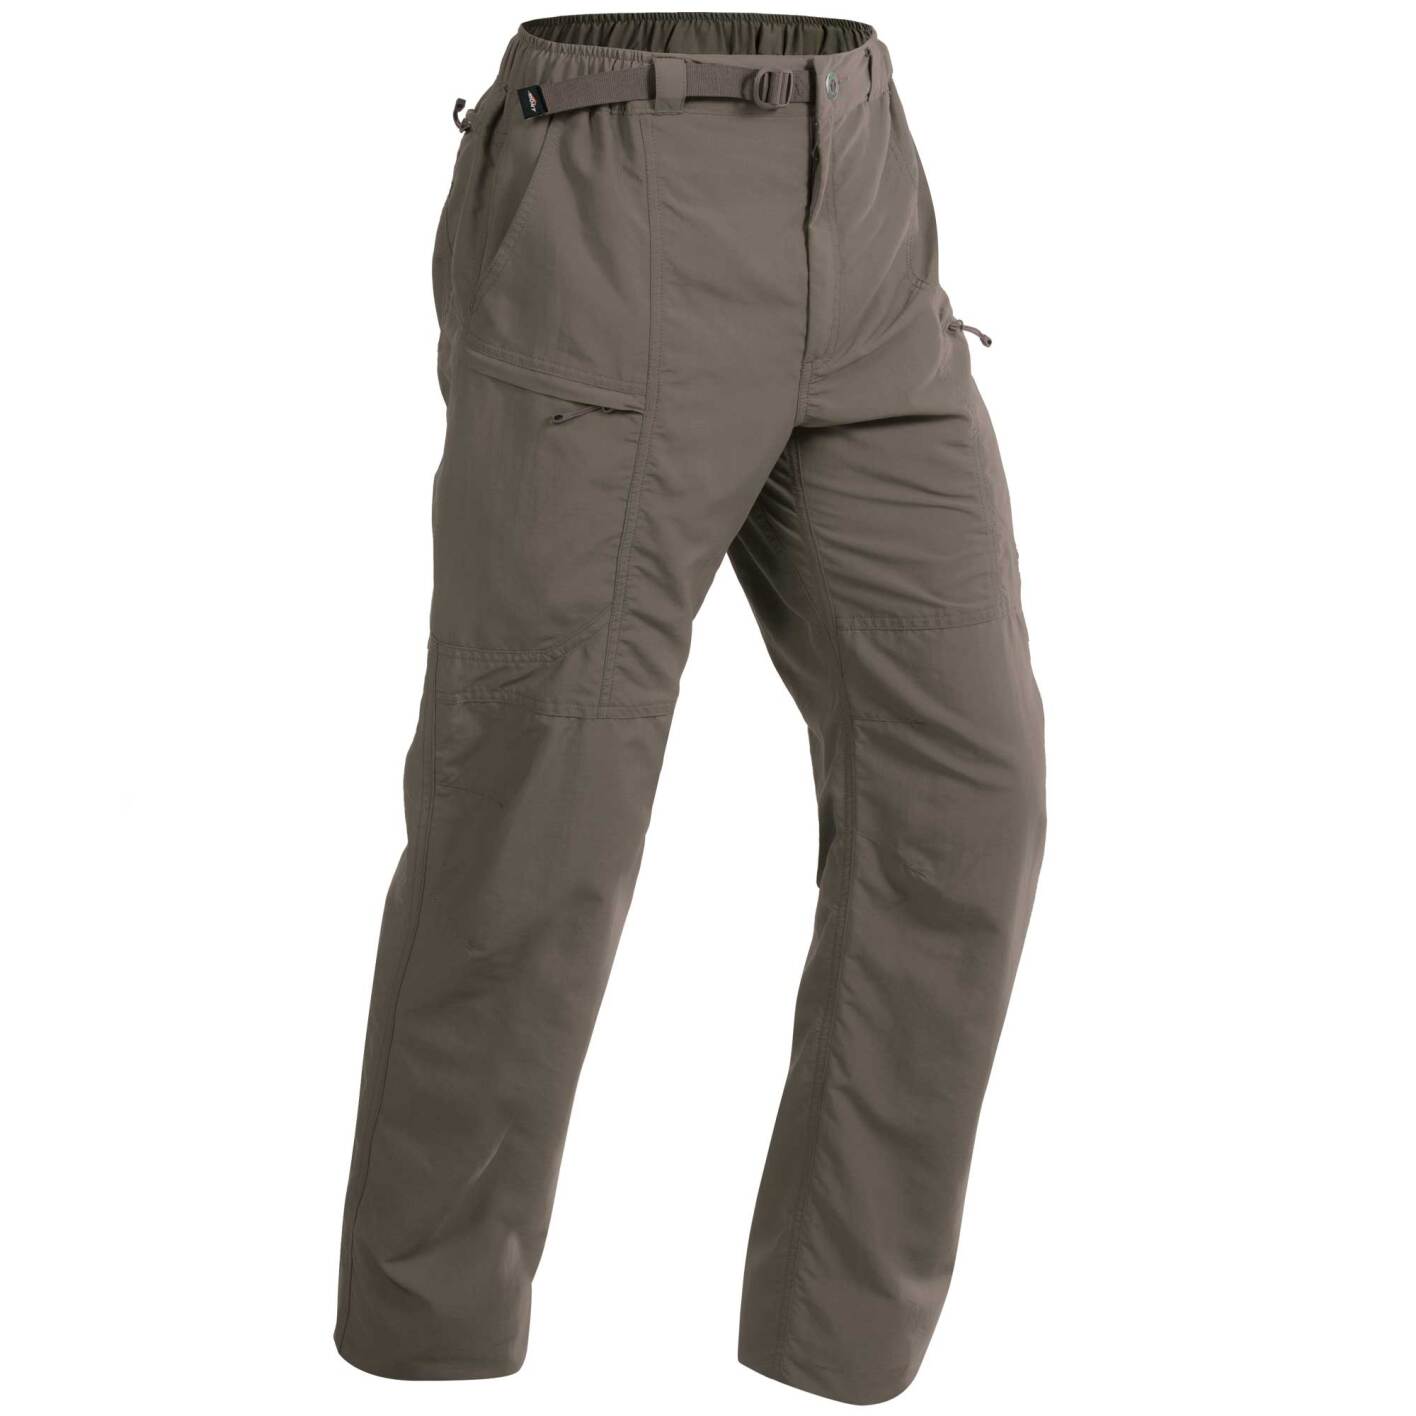 Boyzn Men's 2 Pack Pocket Compression Cool Dry Pants Active Base